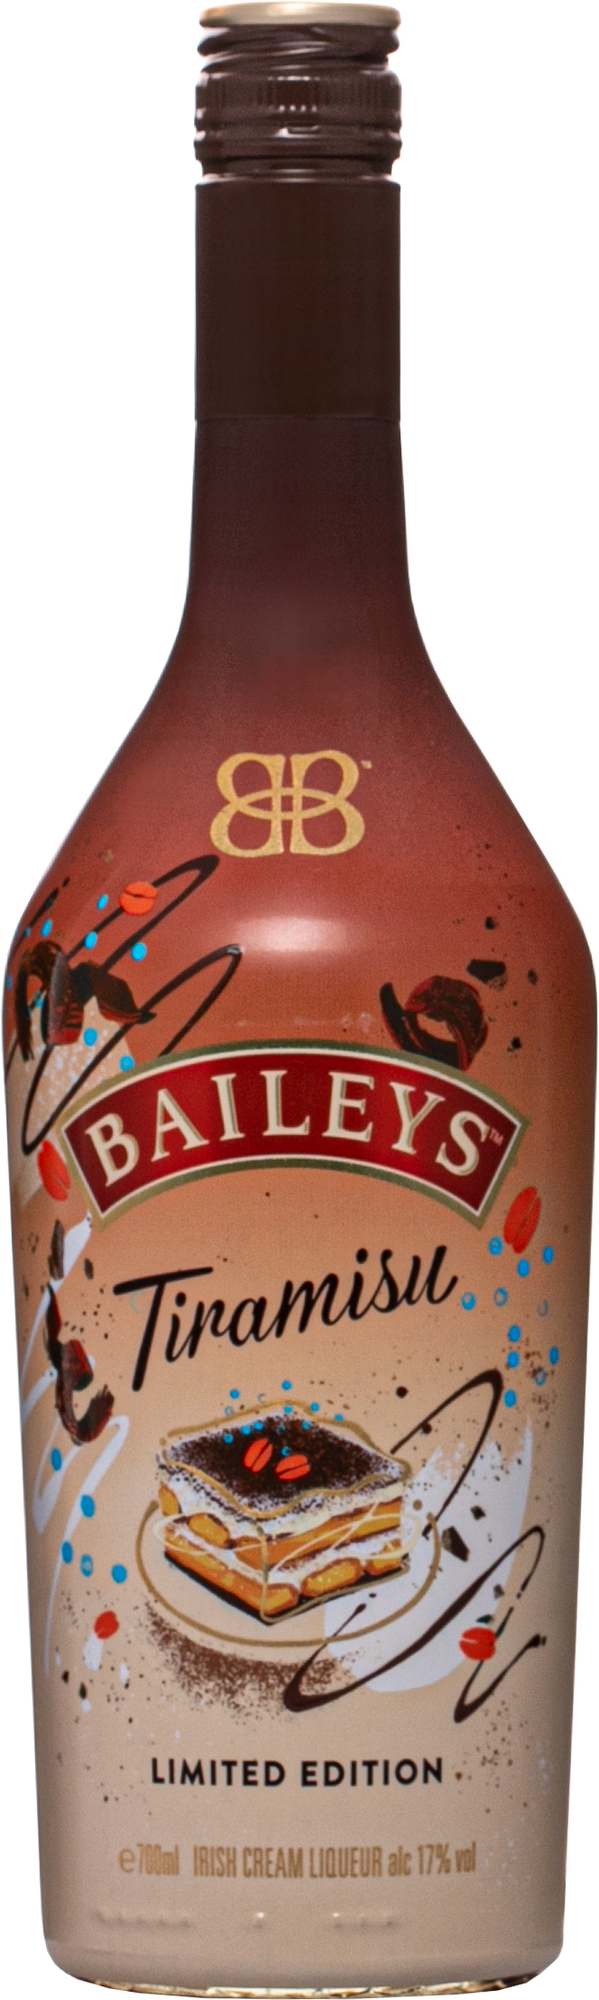 Bailey & Co. Baileys Tiramisu Limited Edition, 17%, 0,7l